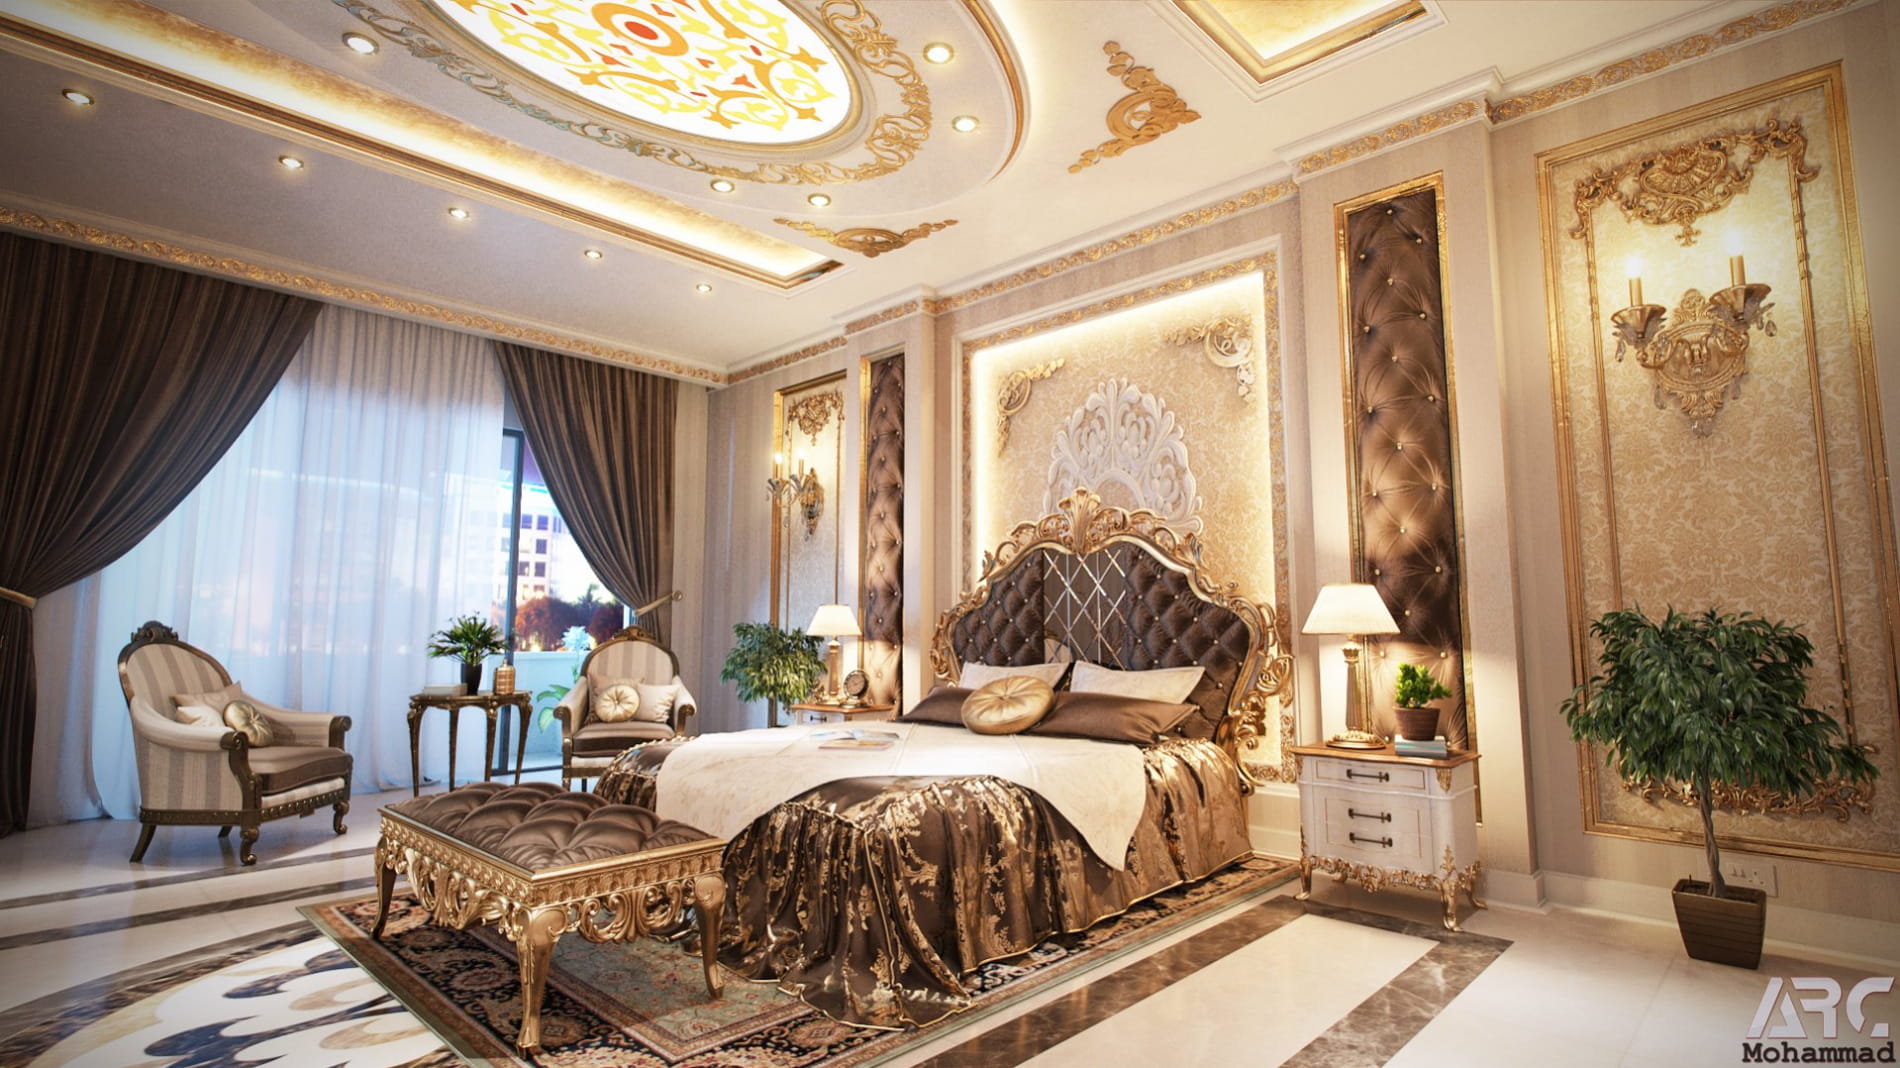 classic-bedroom-design